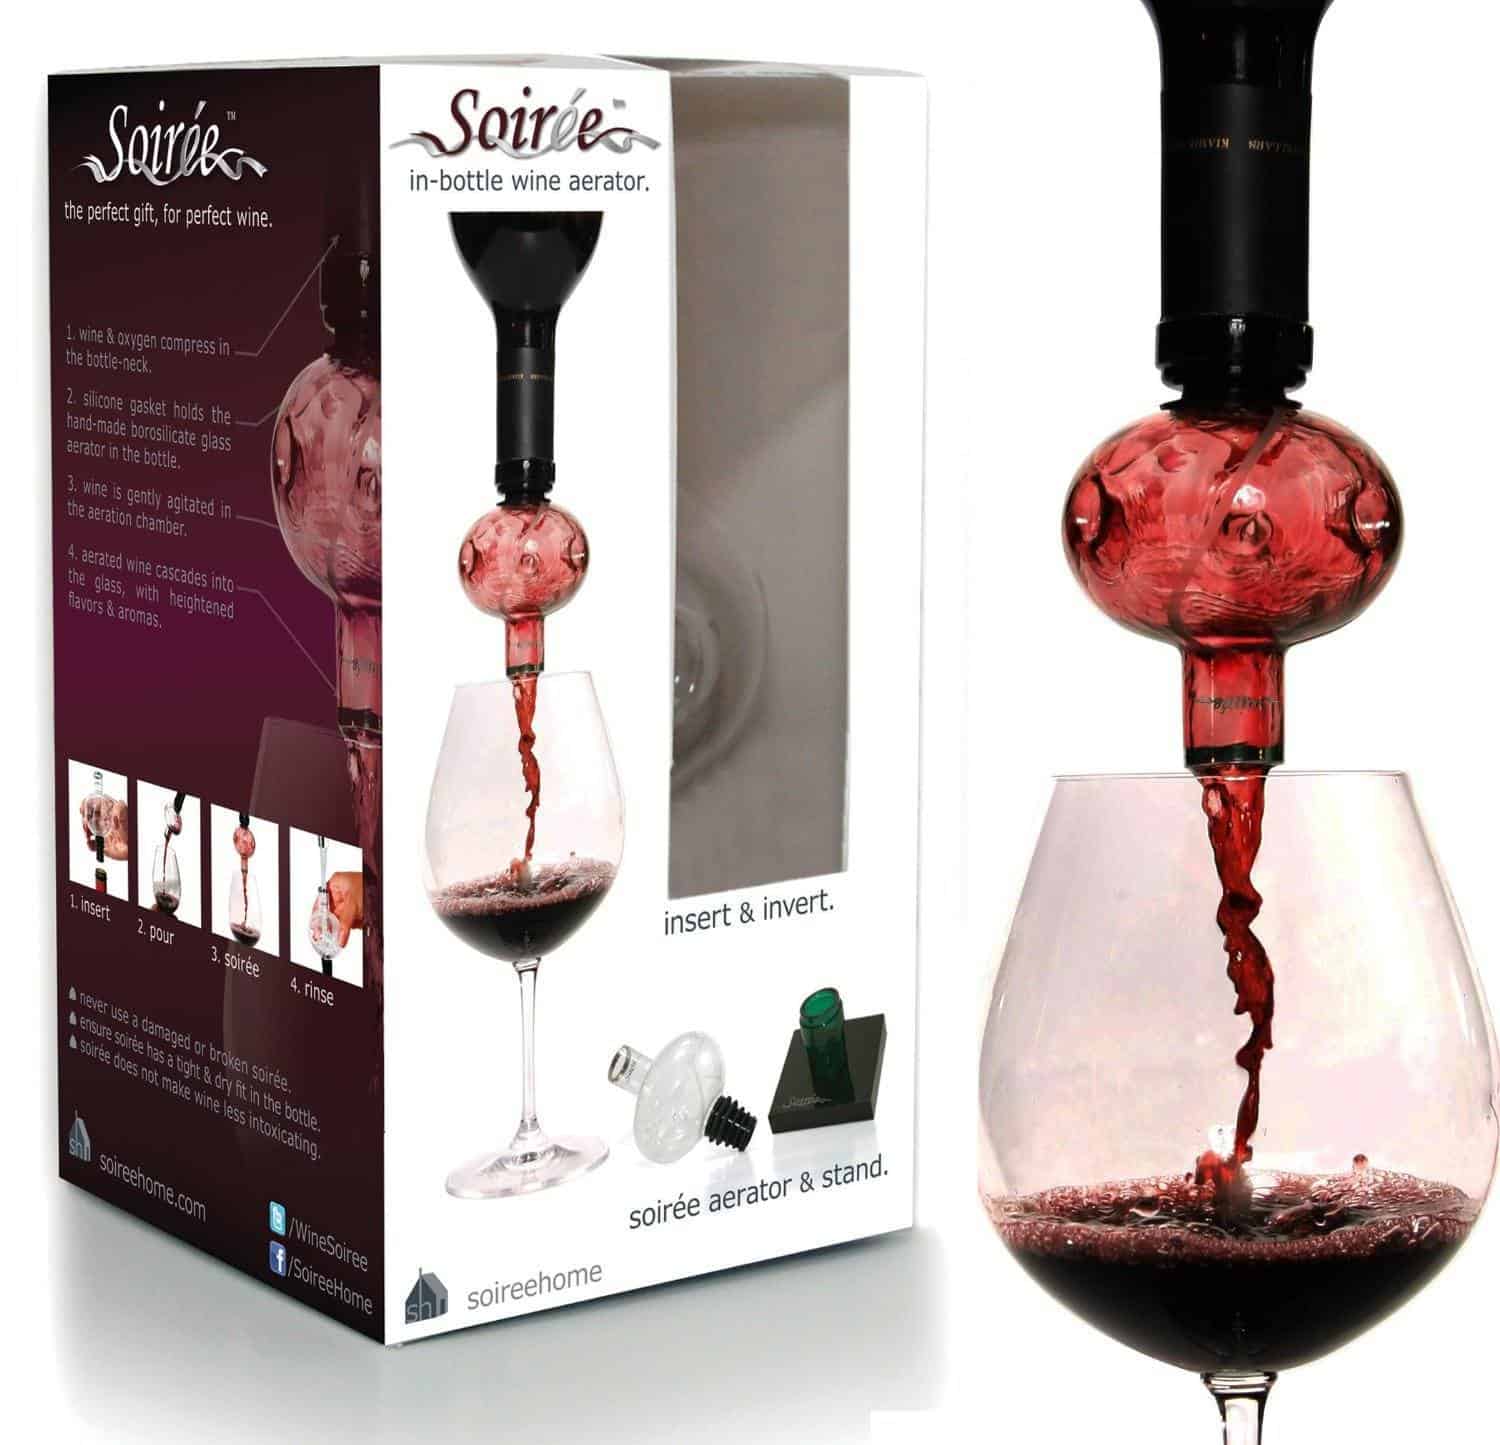 Soiree wine aerator review